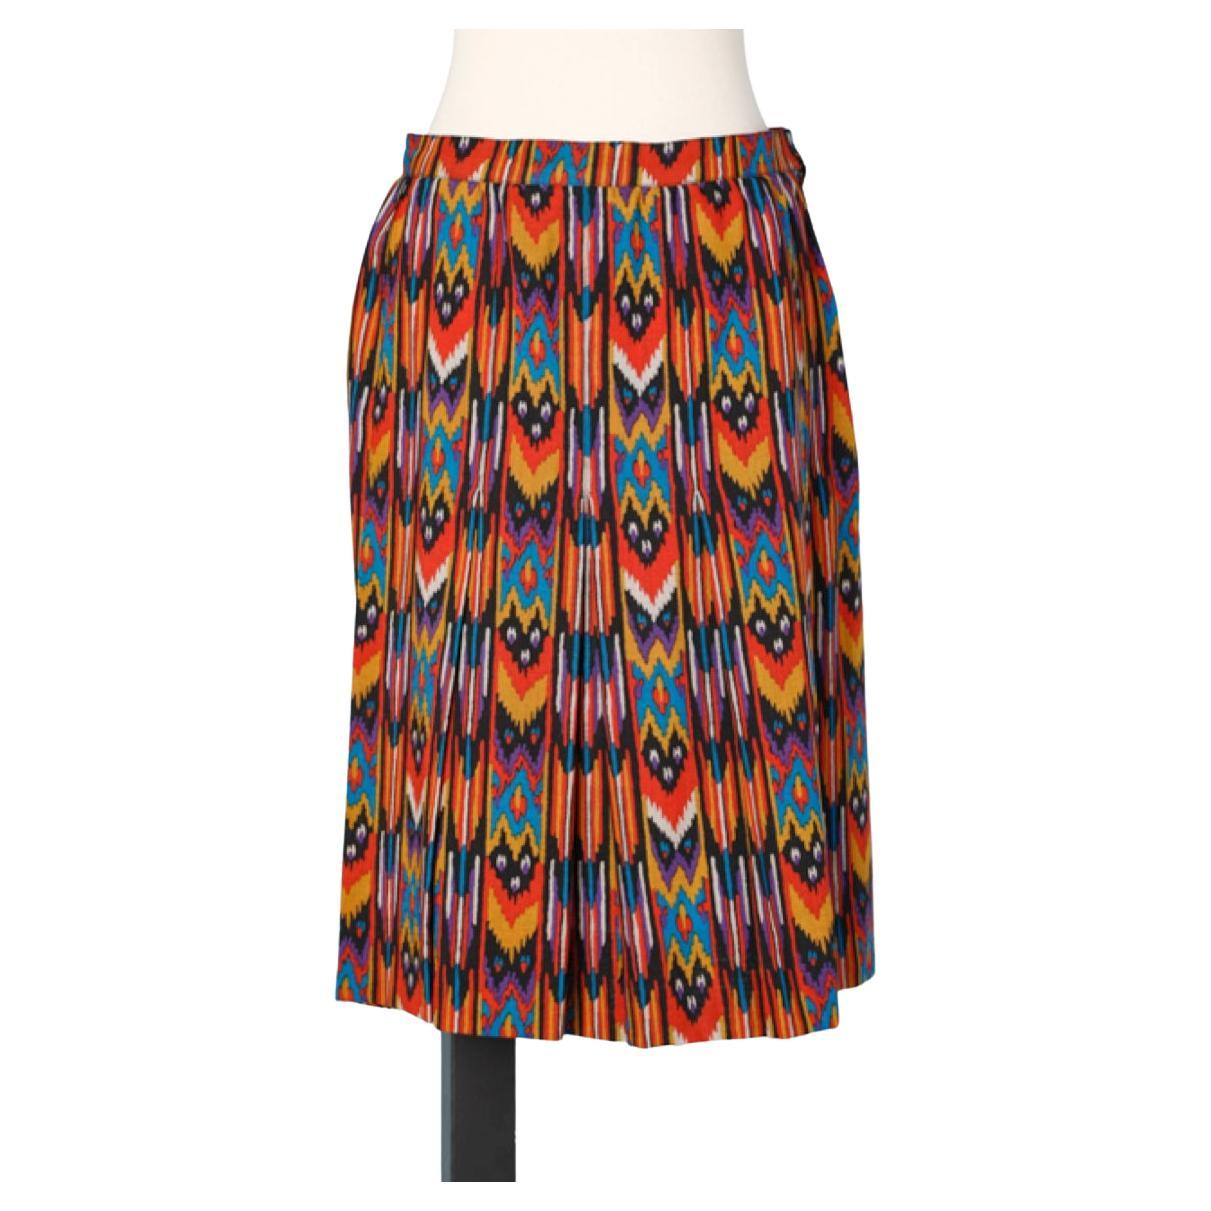 Ikat pattern pleated skirt Saint Laurent Rive Gauche 